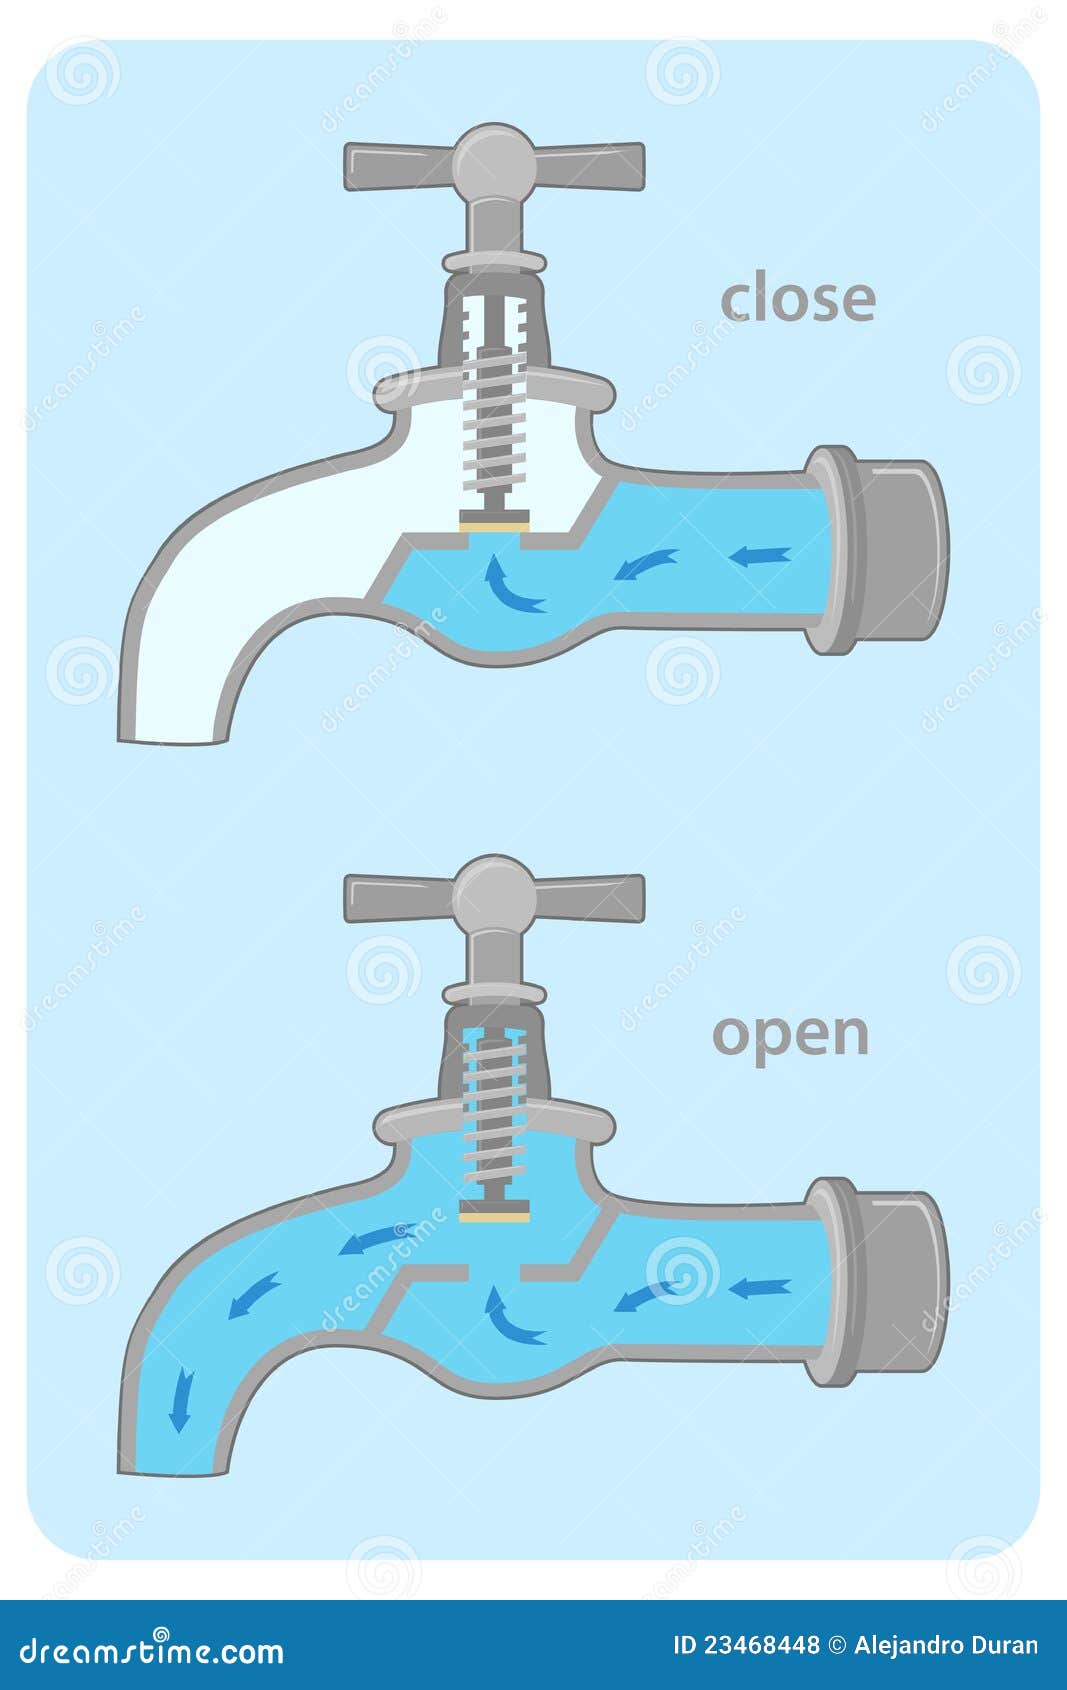 Water tap valve diagram stock vector. Illustration of industry - 23468448